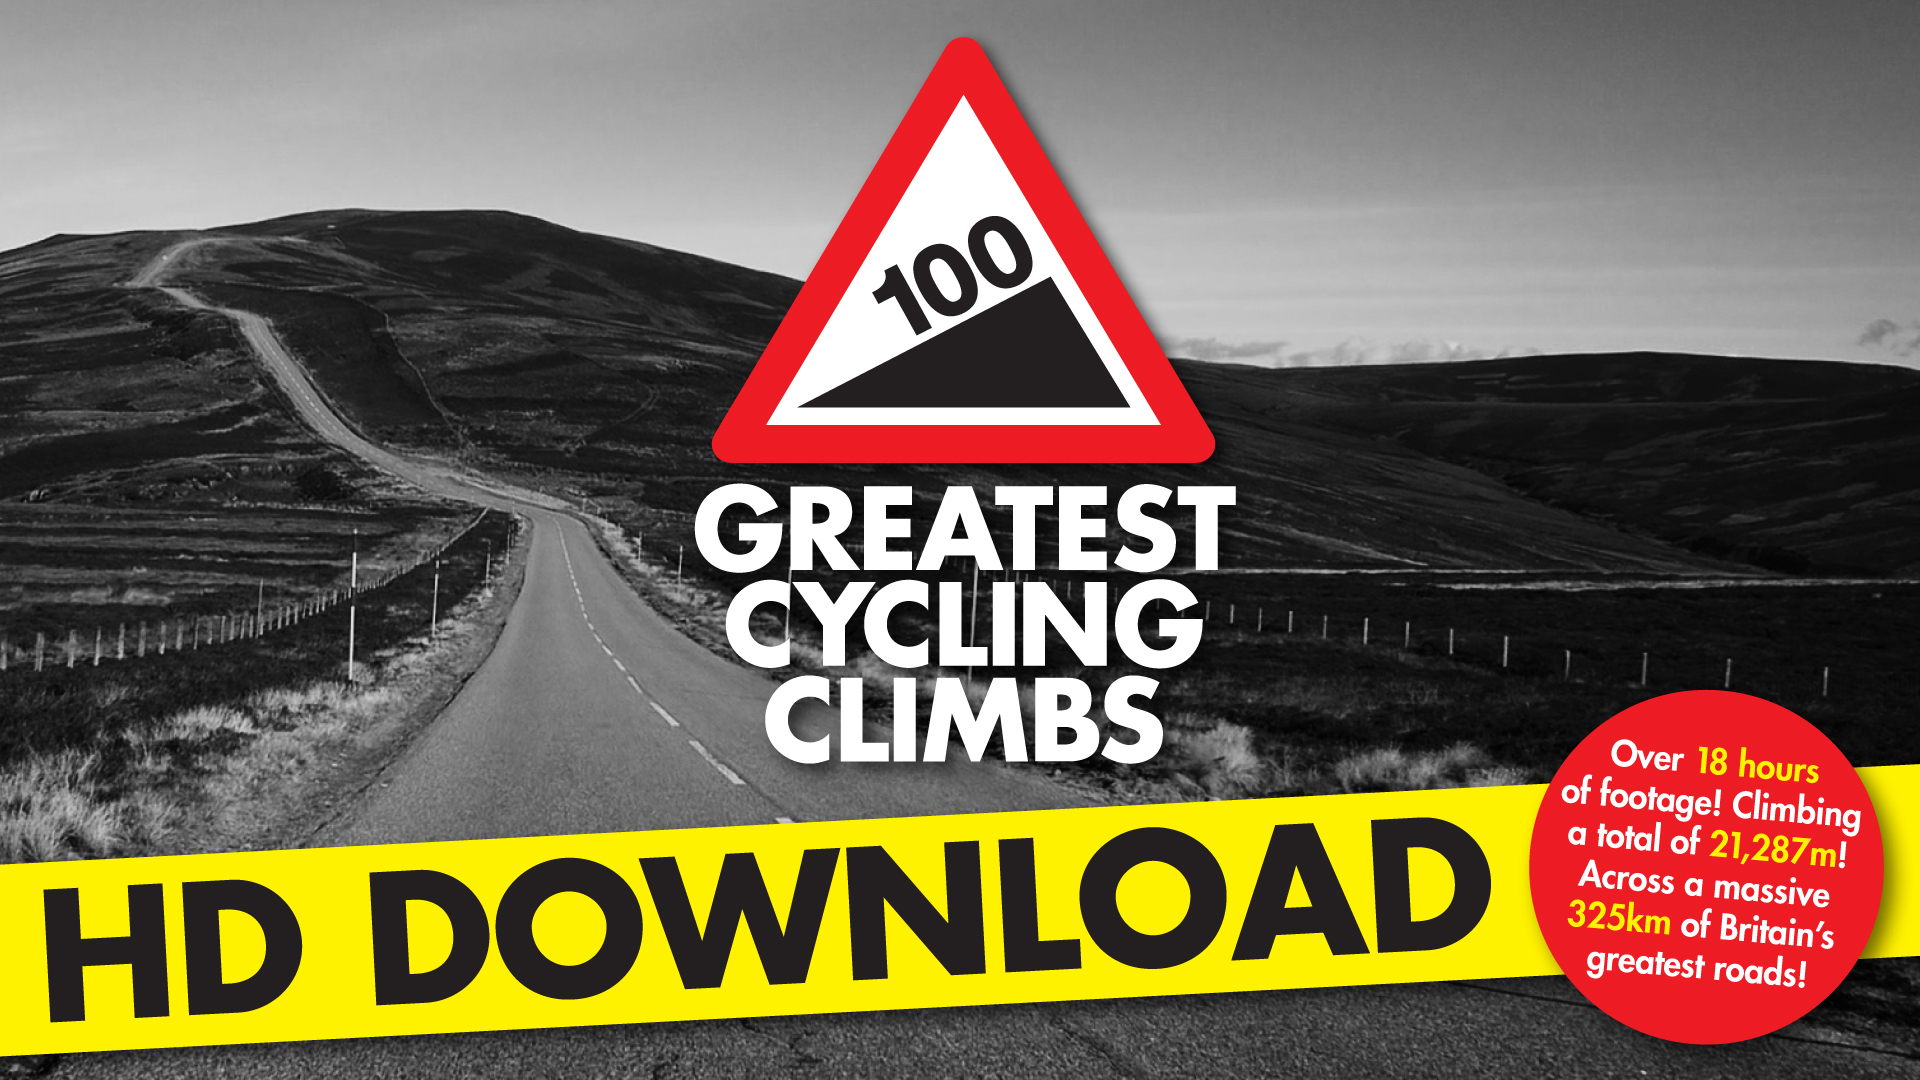 100 greatest cycling climbs